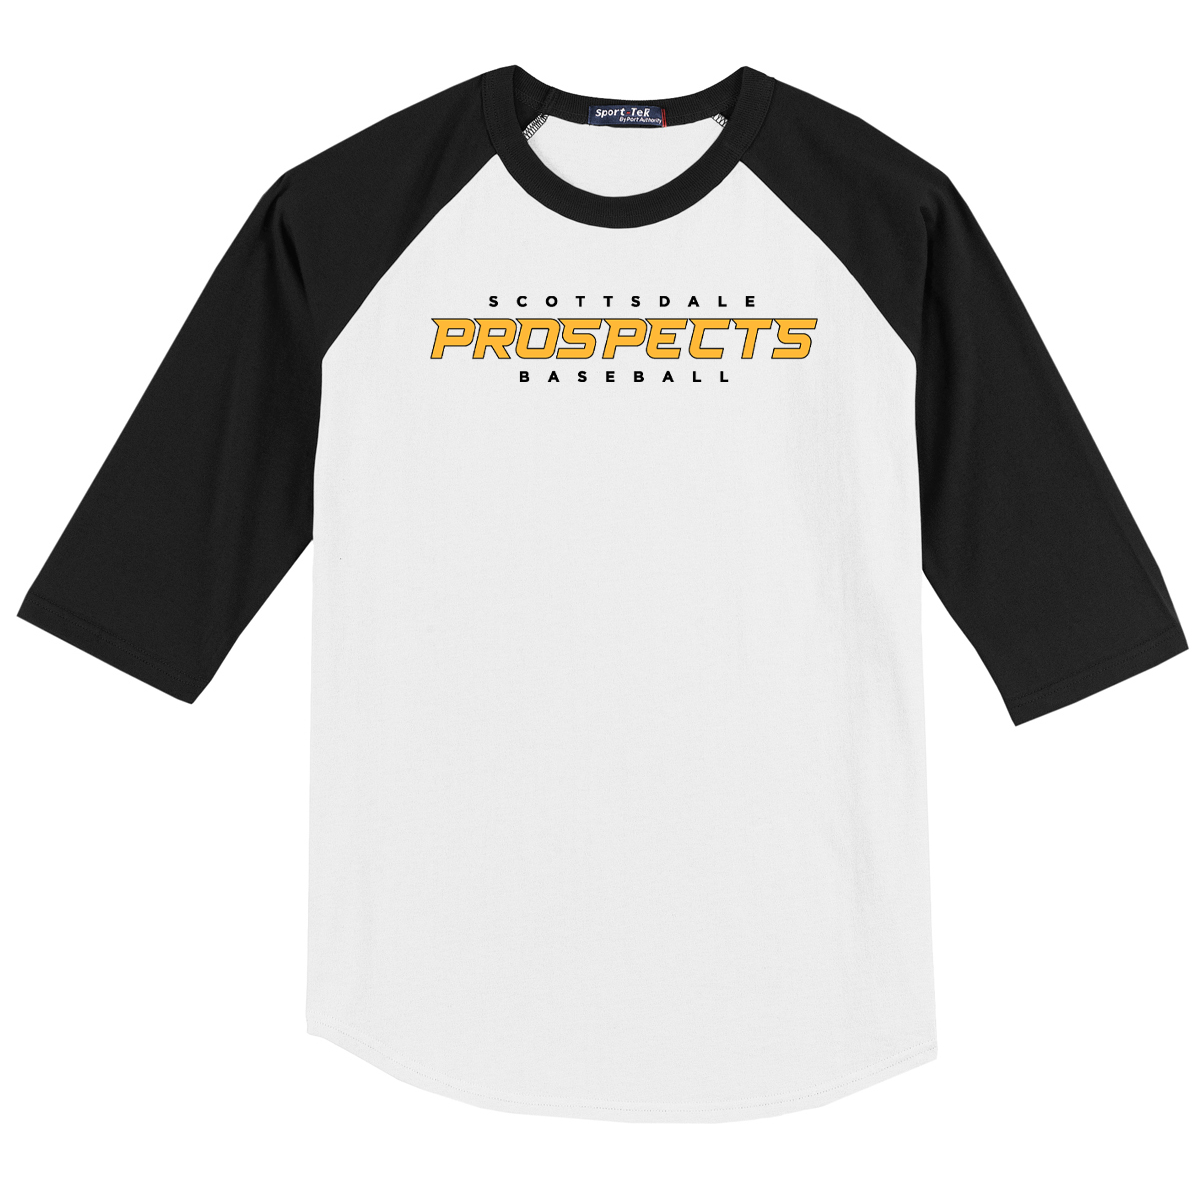 Scottsdale Prospects Baseball 3/4 Sleeve Baseball Shirt